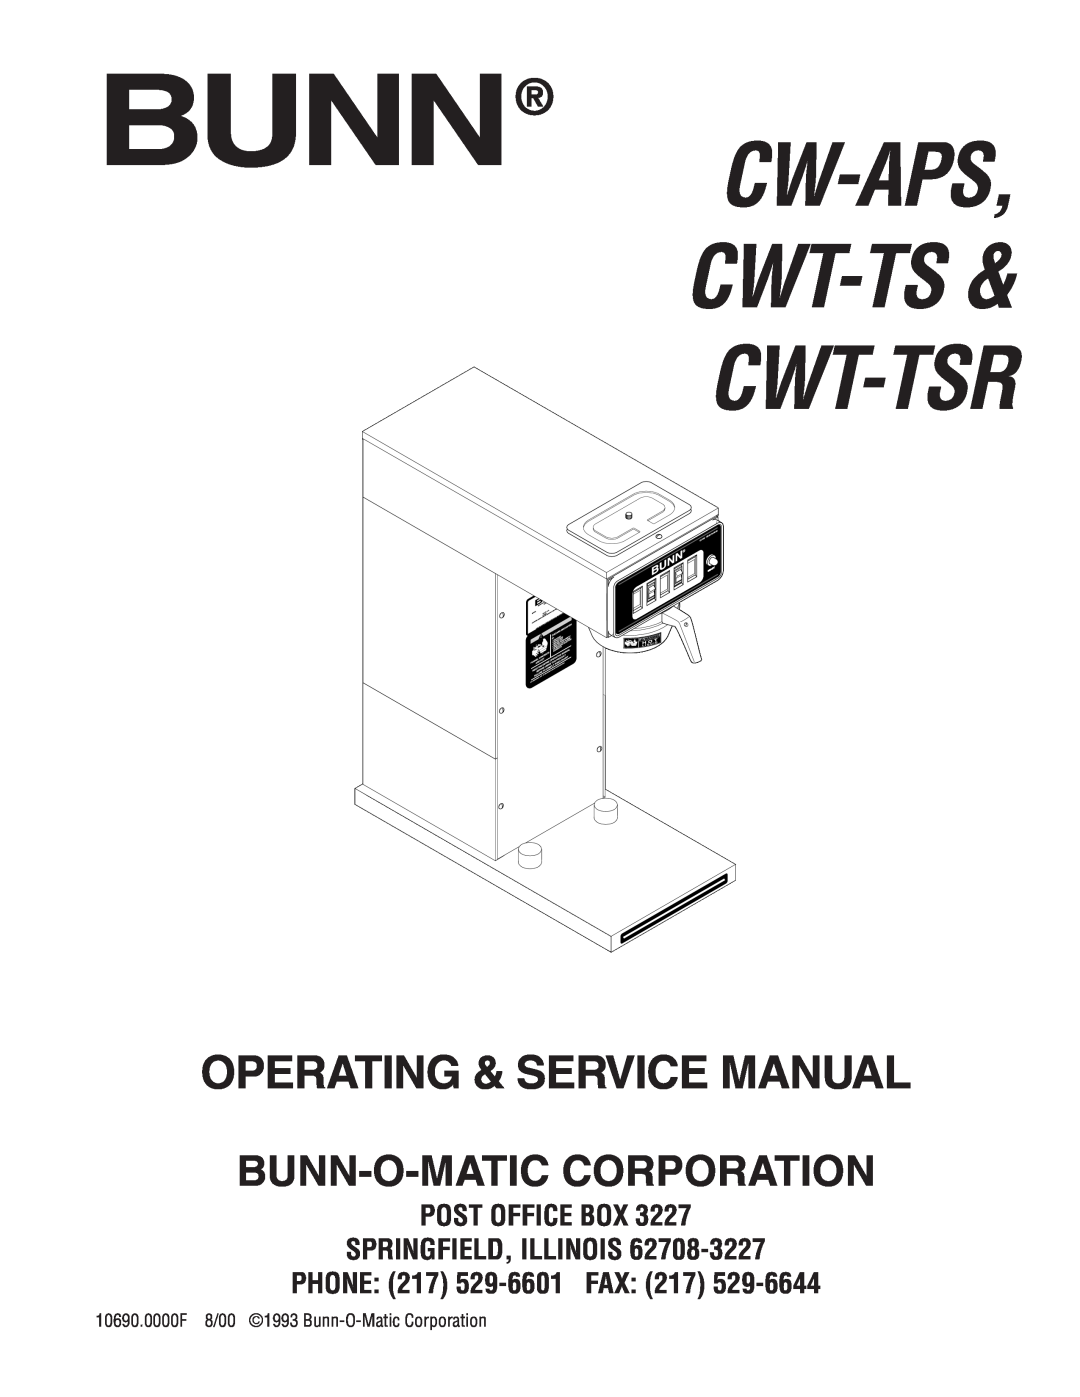 Bunn CWT-TS service manual Cwt-Tsr, Bunn Cw-Aps, Cwt-Ts, Bunn-O-Maticcorporation, Post Office Box Springfield, Illinois 